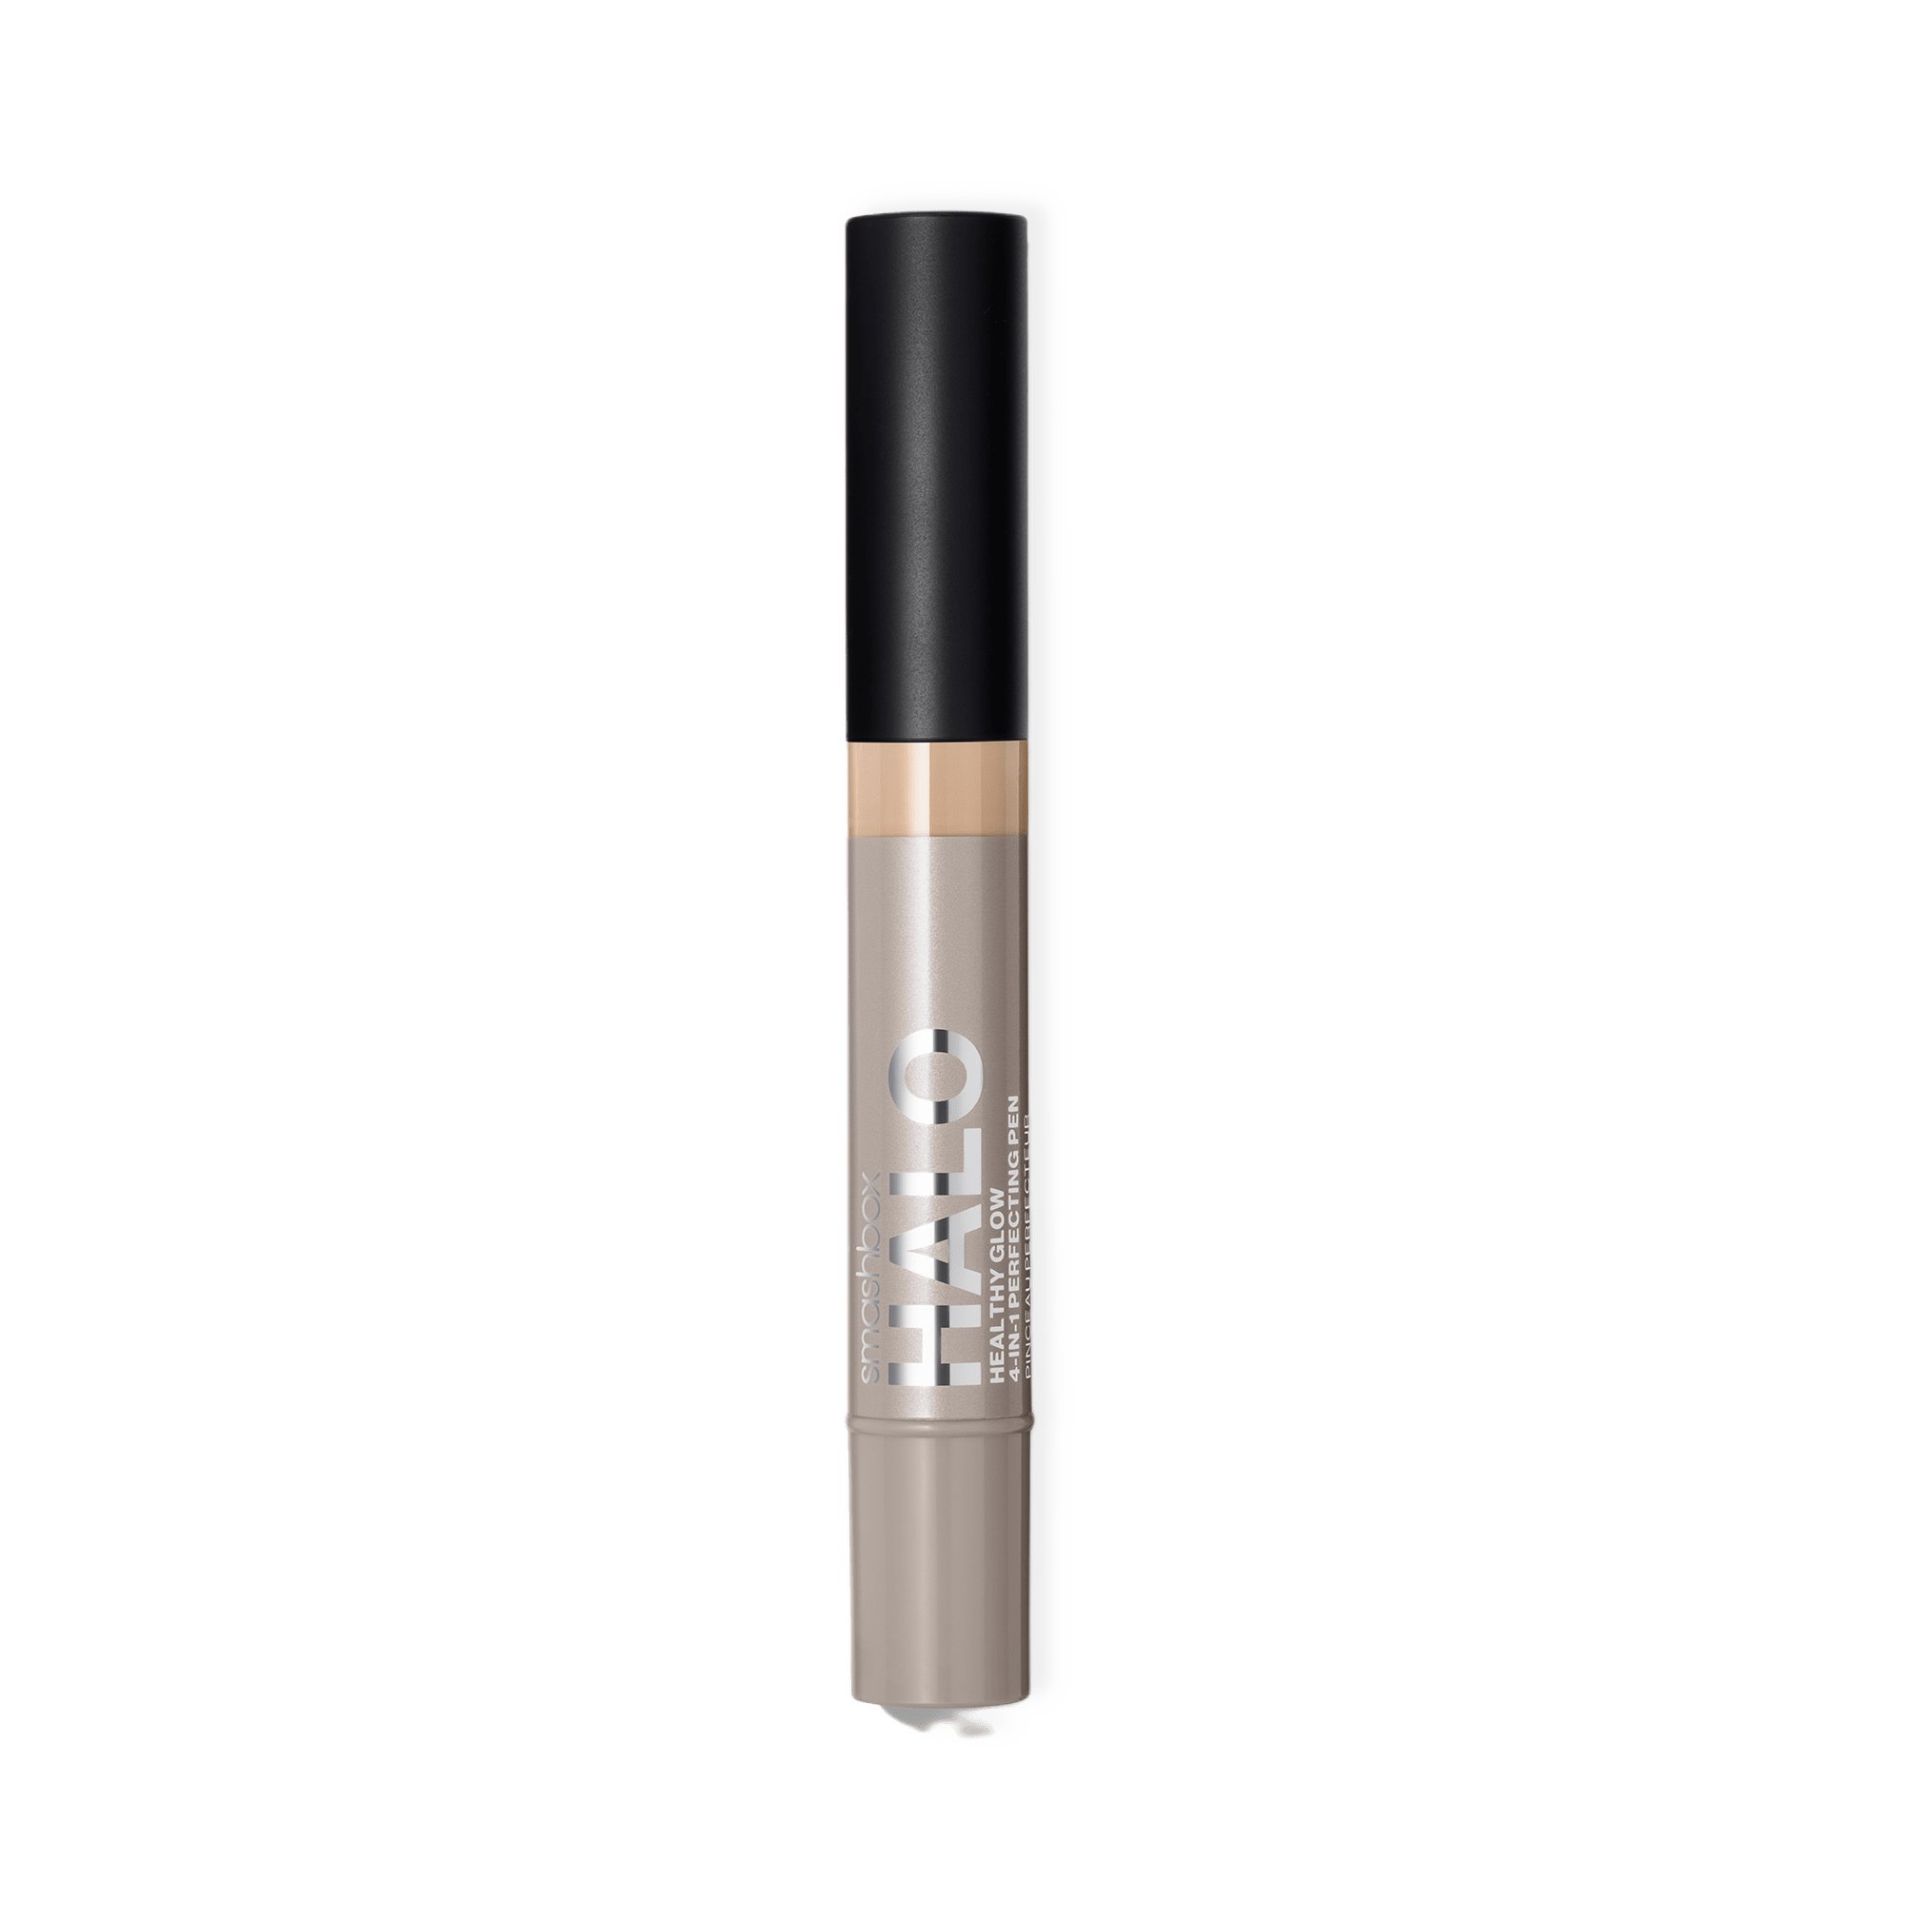 Halo Healthy Glow 4-in-1 Perfecting Concealer Pen från Smashbox